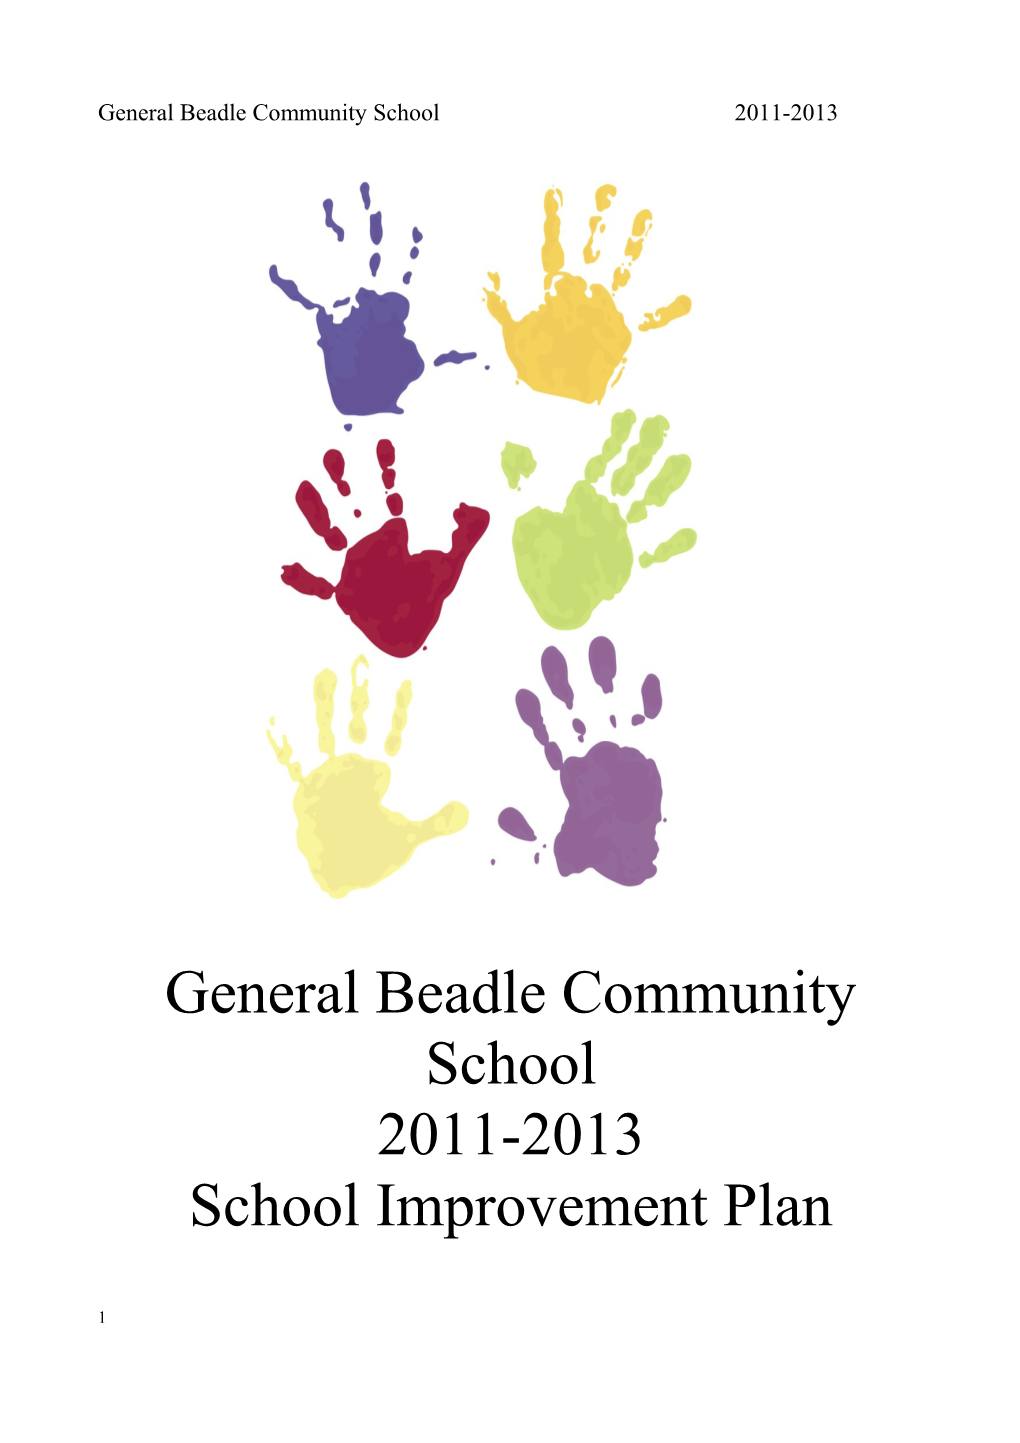 General Beadle Elementary